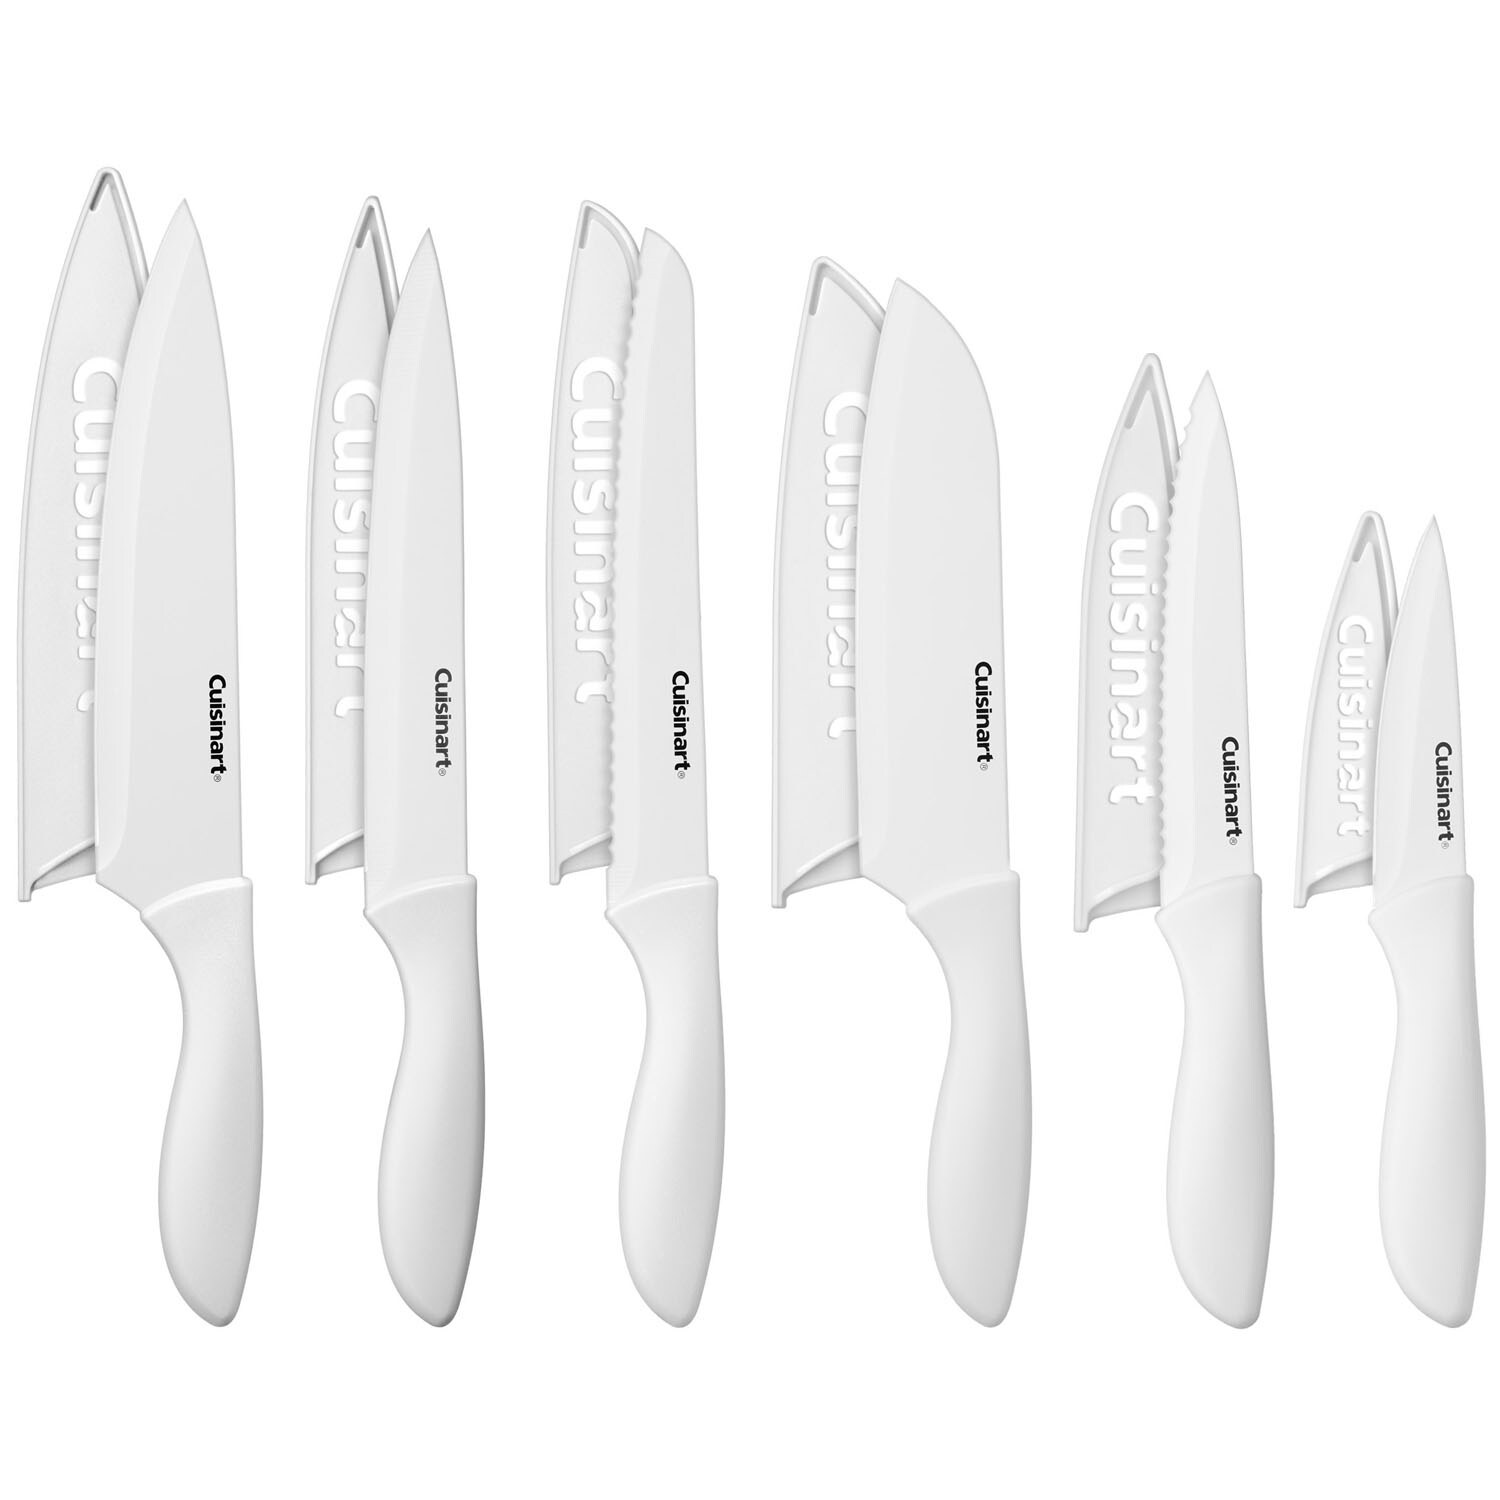 Cuisinart Advantage 12-Piece Knife Set and Guards Bundle with